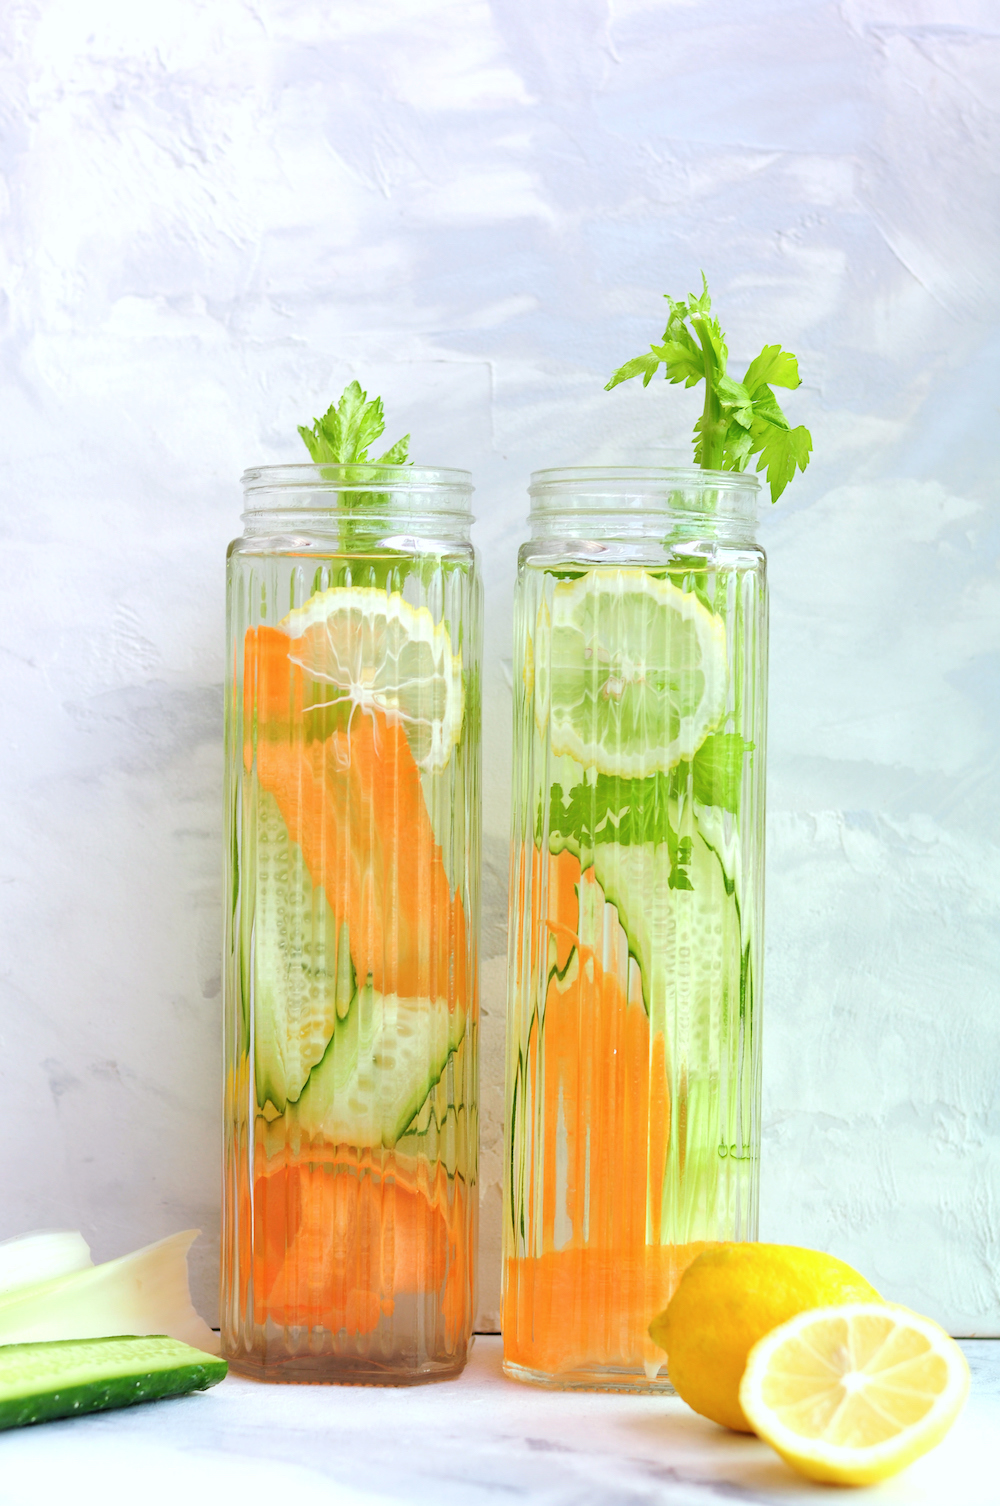 https://www.streetsmartkitchen.com/wp-content/uploads/Cucumber-Lemon-Water-with-Carrots-and-Celery-2.jpg